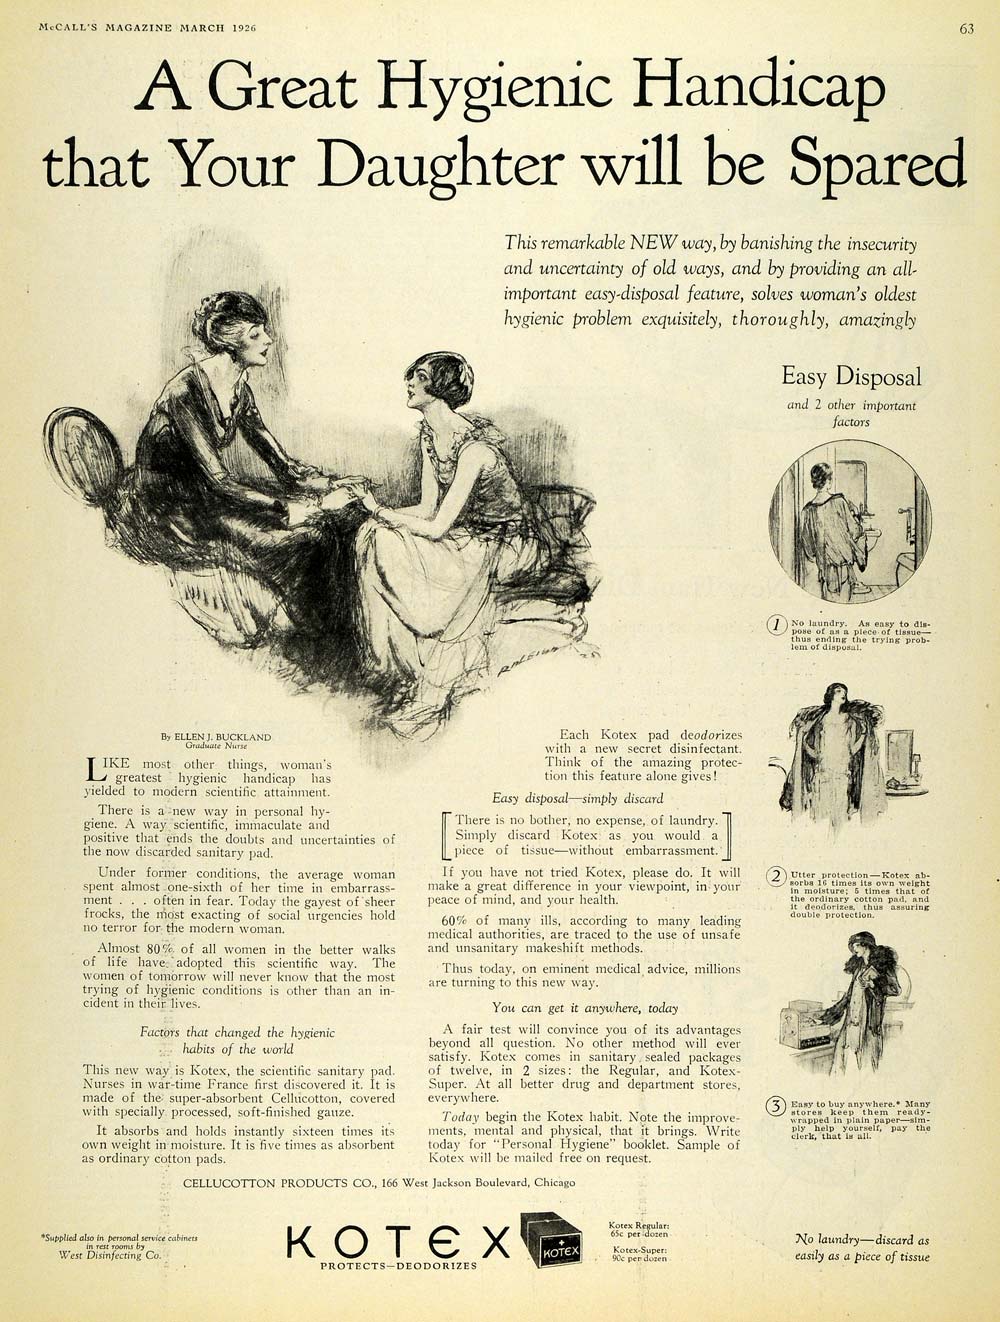 1926 Ad Kotex Female Hygiene Sanitary Pads Cellucotton - ORIGINAL MCC4